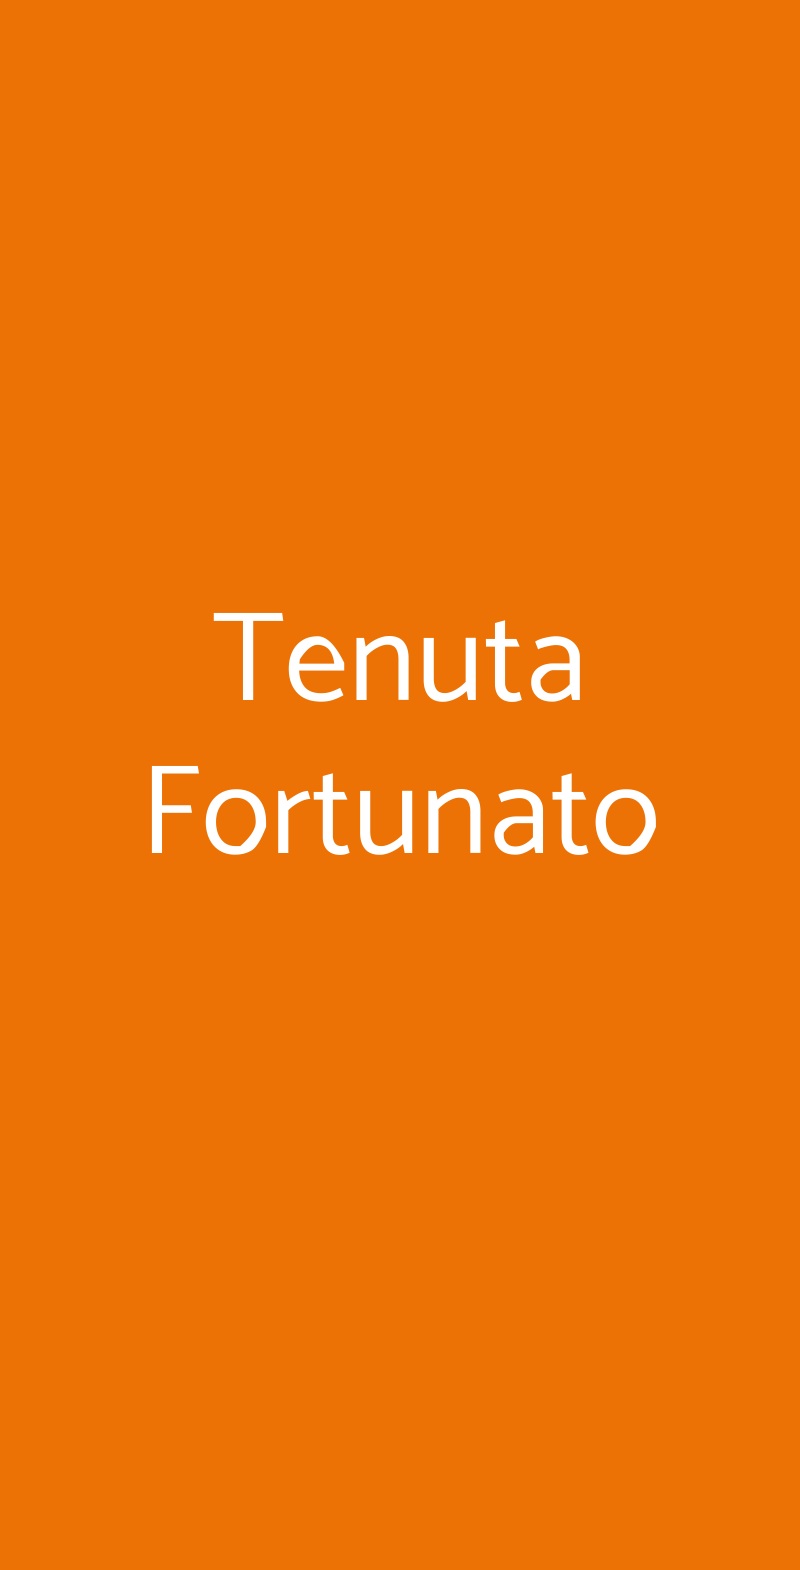 Tenuta Fortunato Senise menù 1 pagina